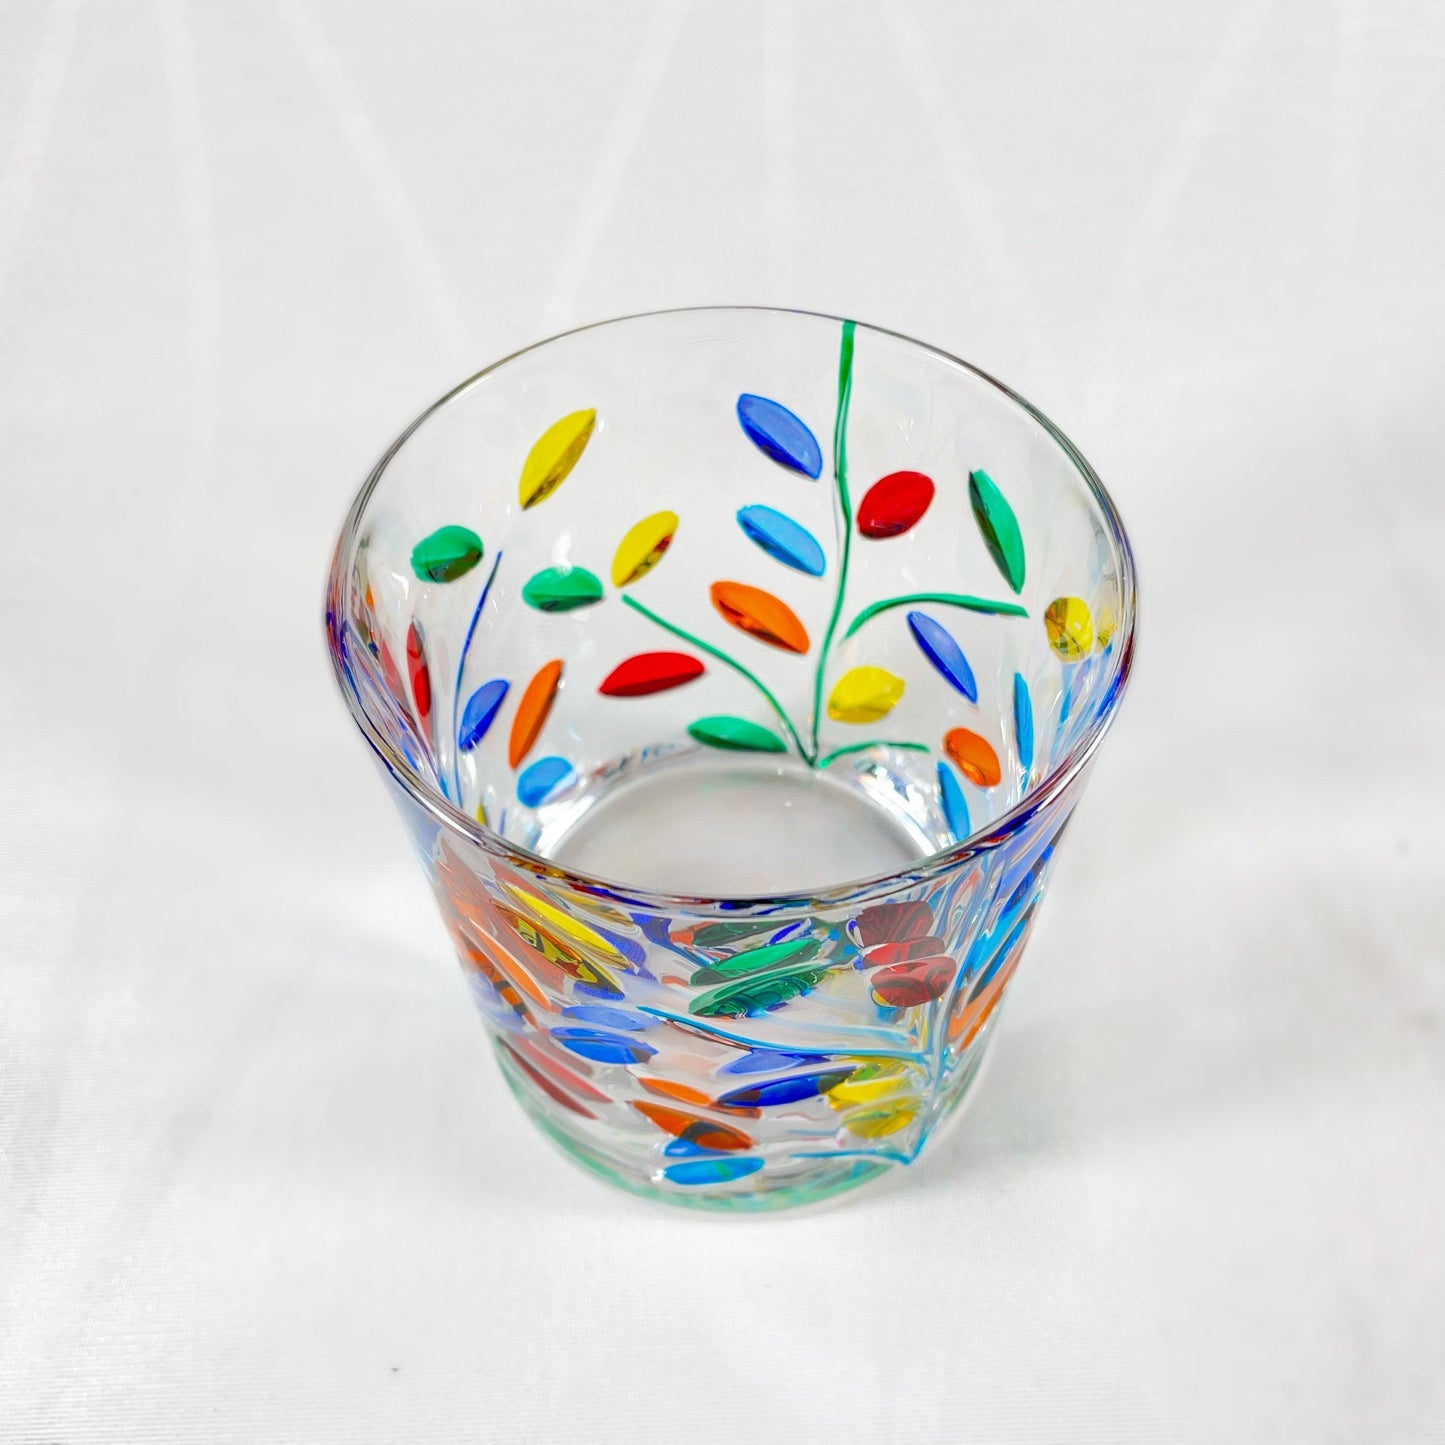 Venetian Glass Tree of Life Tumbler - Handmade in Italy, Colorful Murano Glass